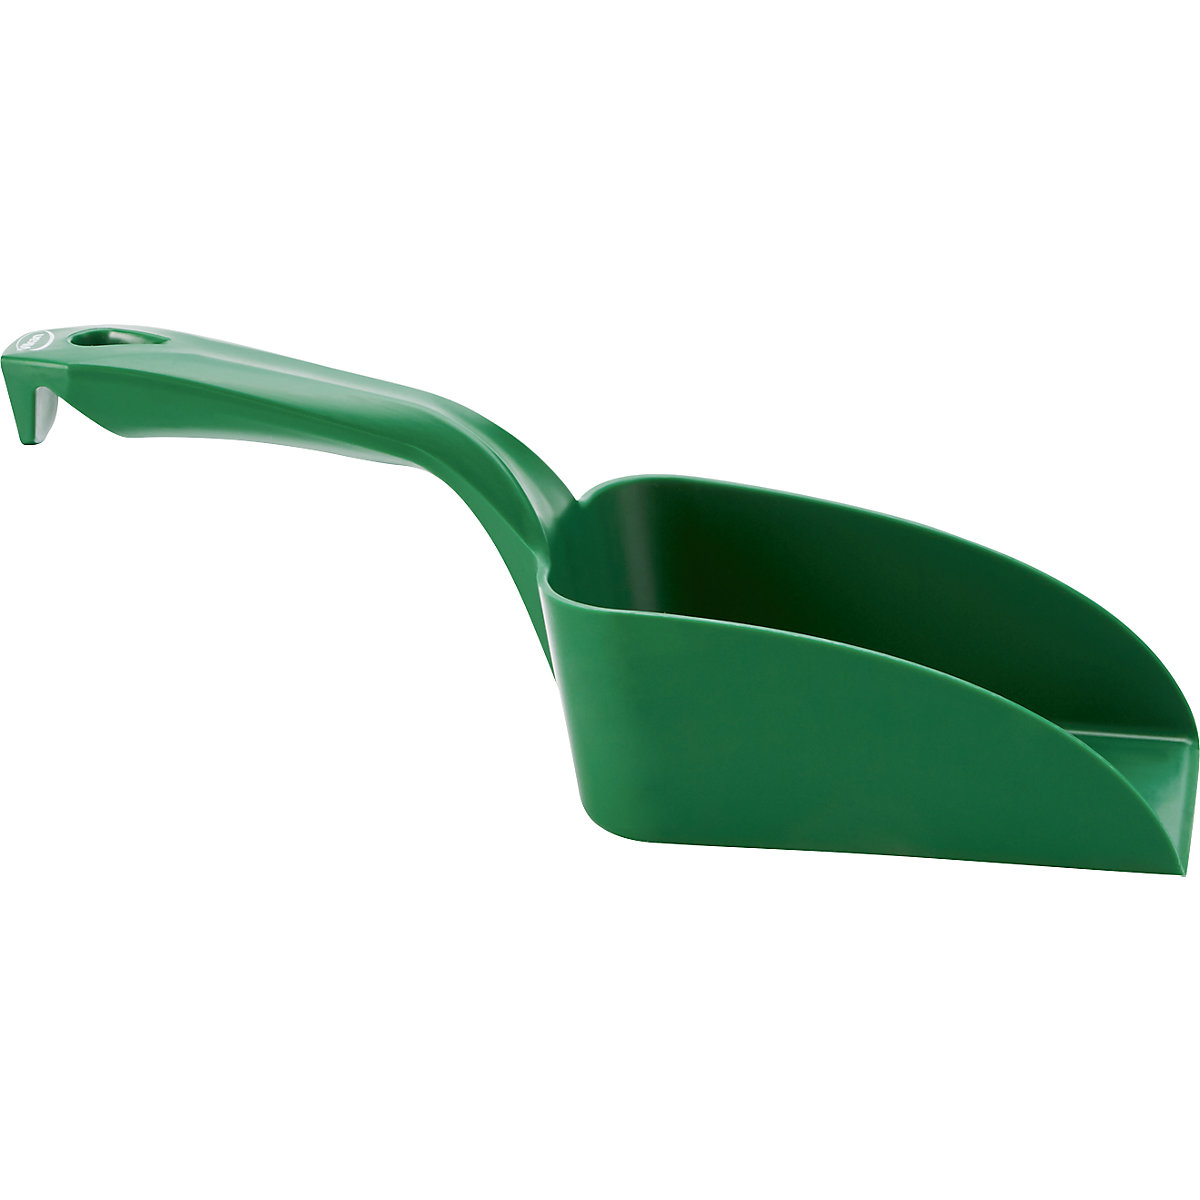 Hand shovel, suitable for foodstuffs – Vikan (Product illustration 6)